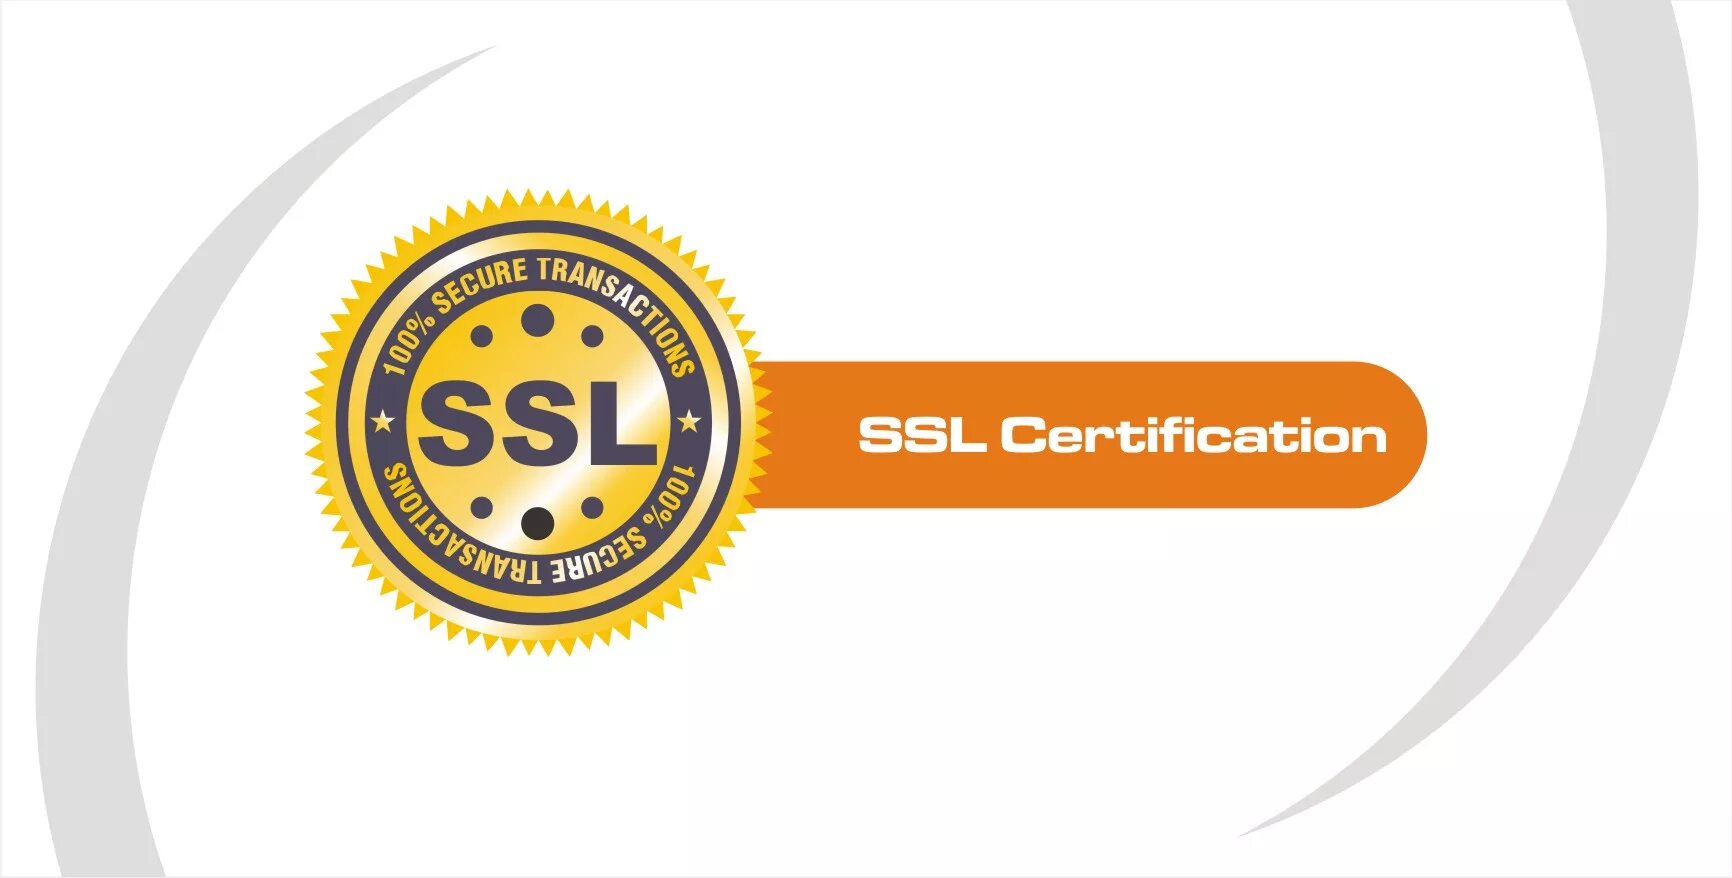 SSL логотип. SSL сертификат. Центры сертификации SSL. Сертификат логотип.